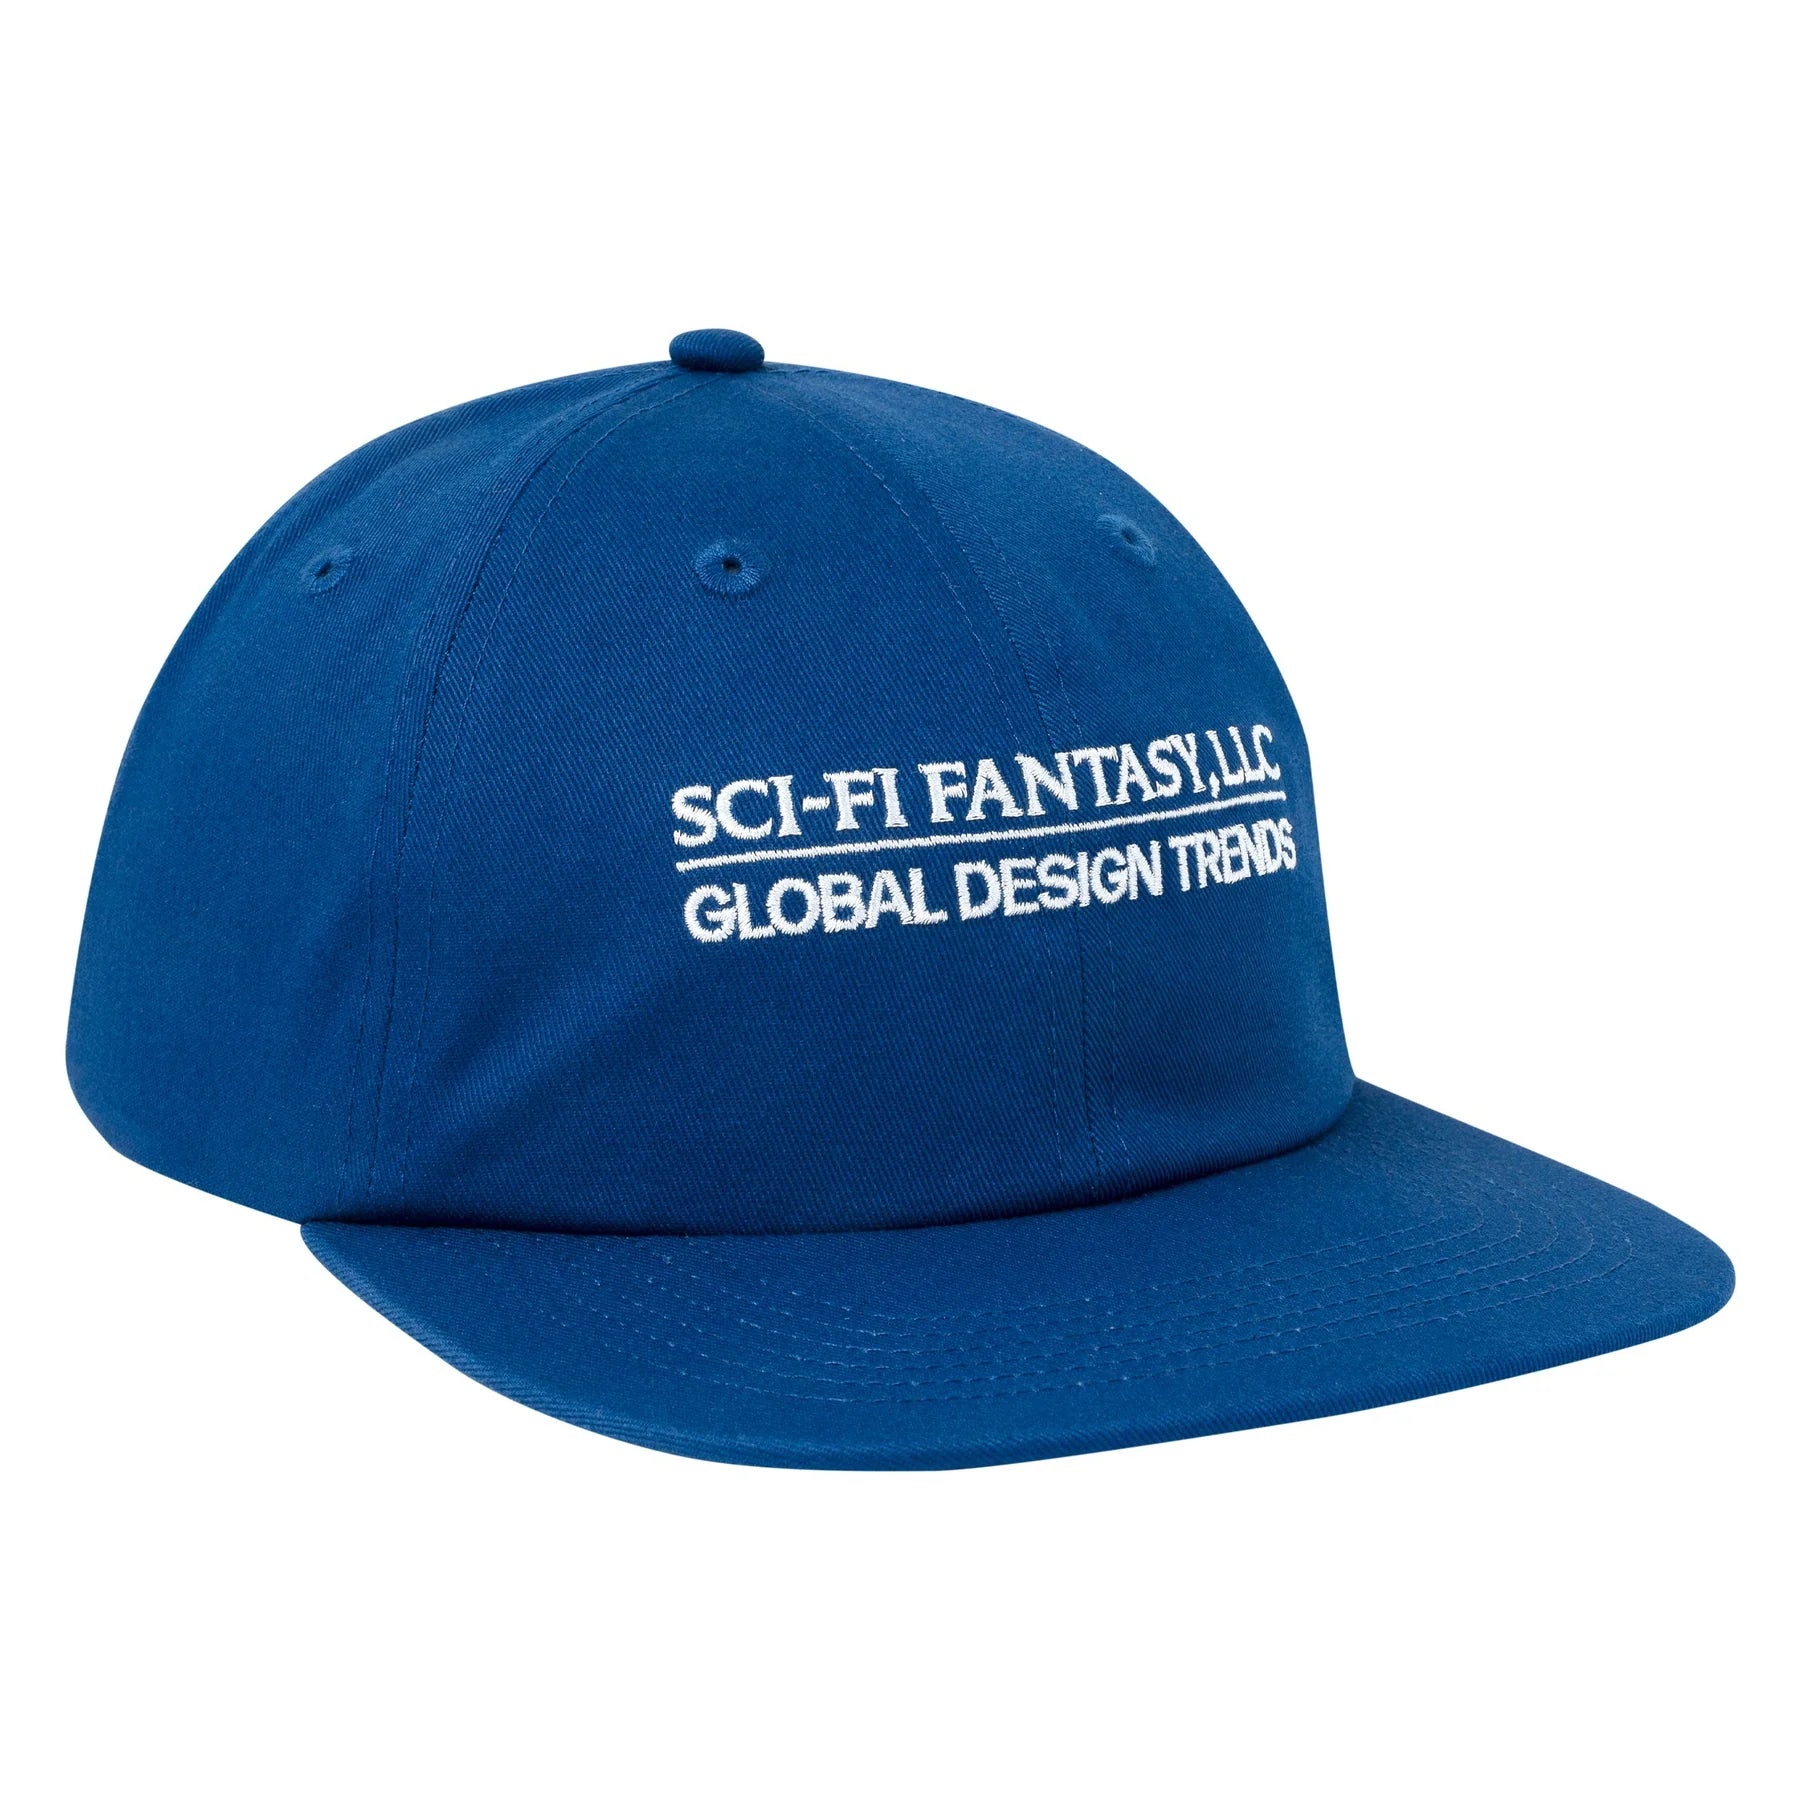 Sci-Fi Global Designs Trends Hat - Navy